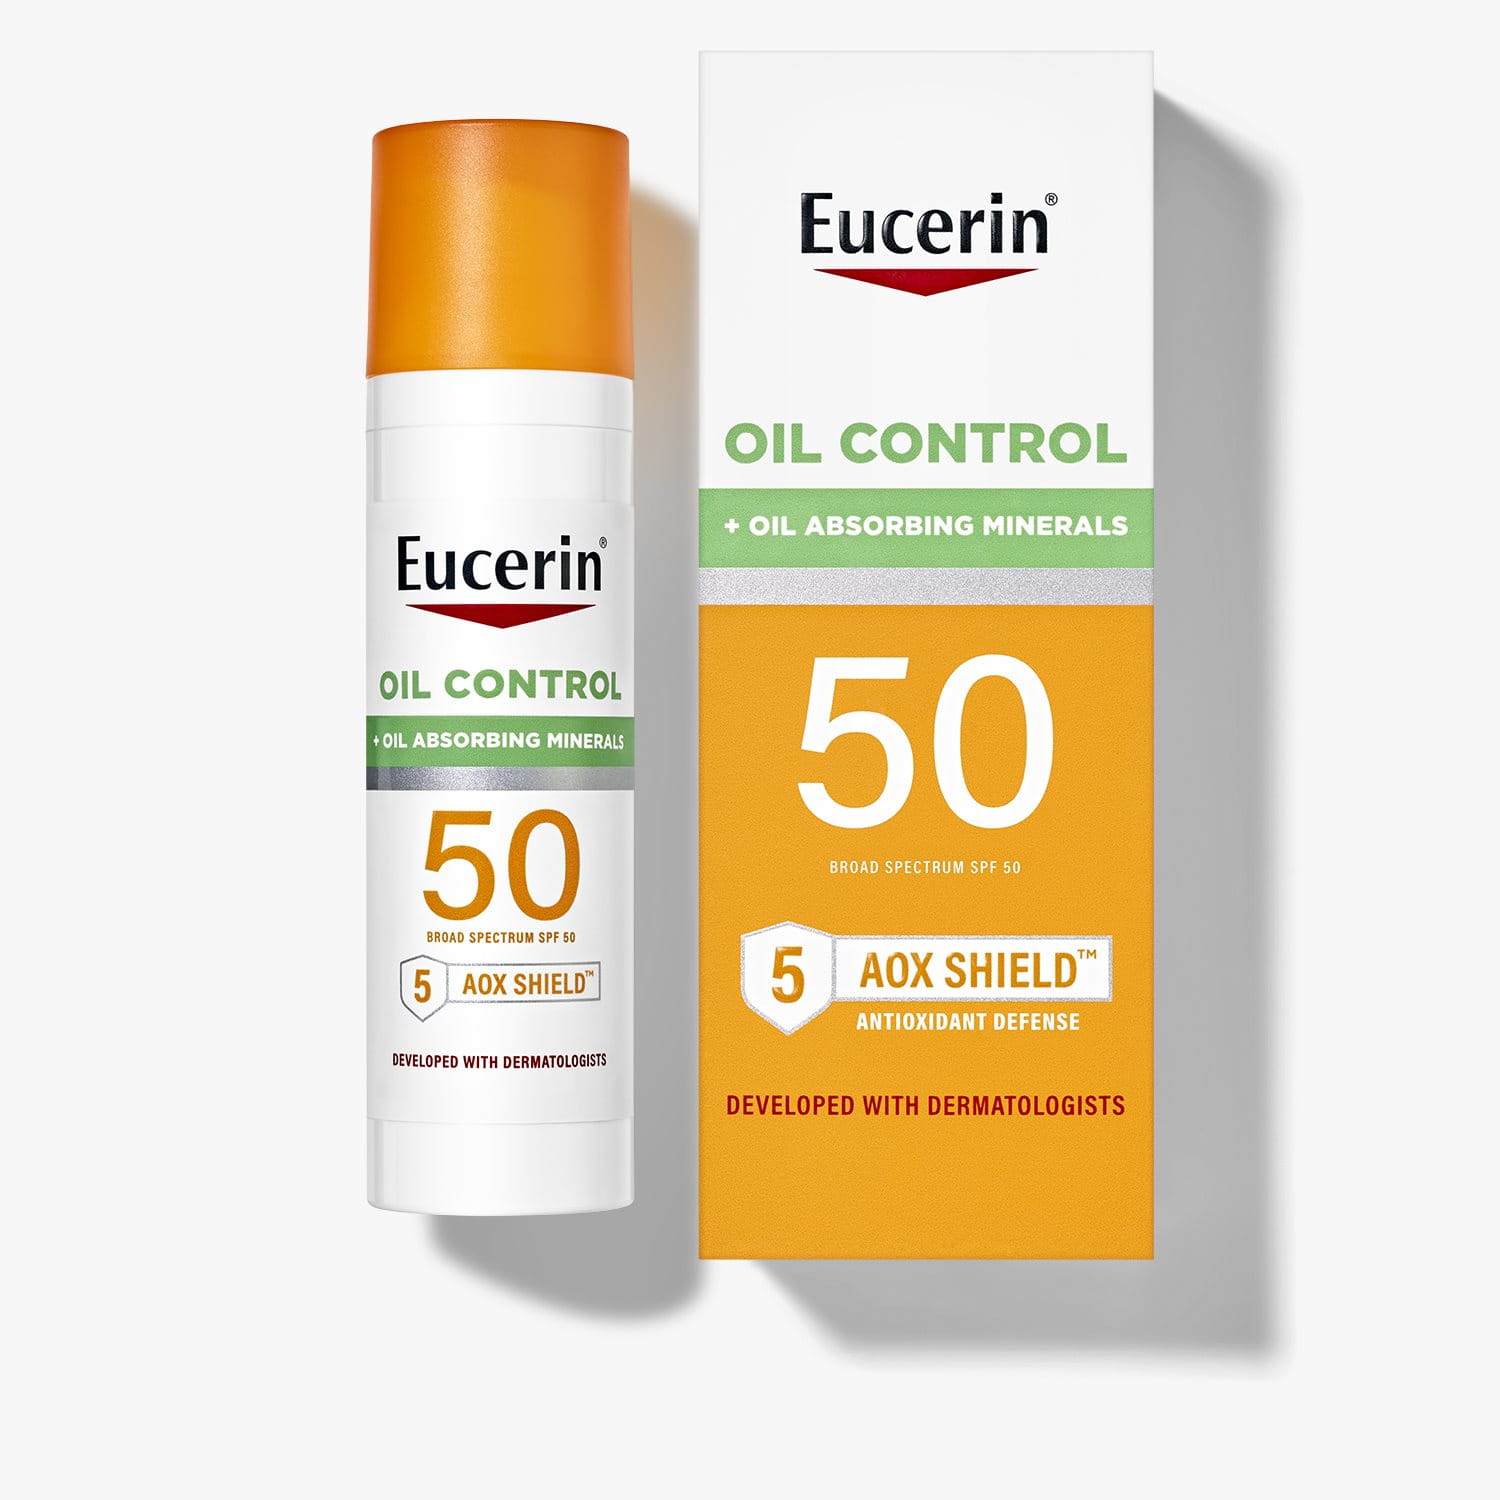 Eucerin Oil Control Dry Touch Sun Gel Cream Ultra Light Acne Skin SPF50+  50mlNIB